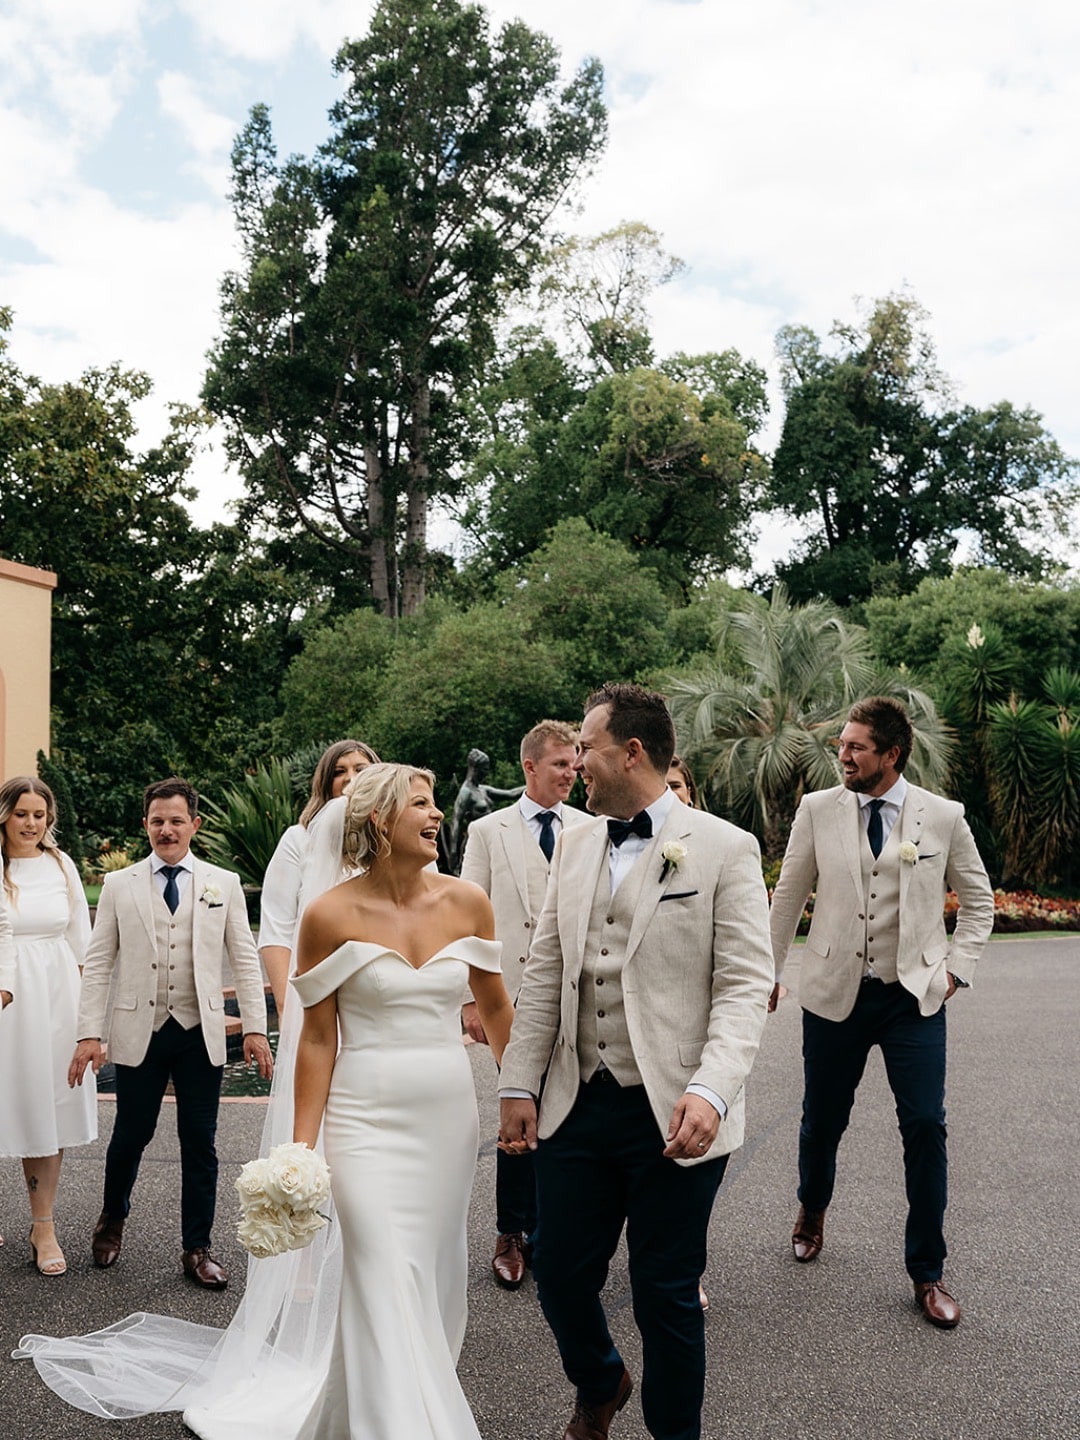 Cameron & Kimberly's Wedding | Men's Wedding Suits